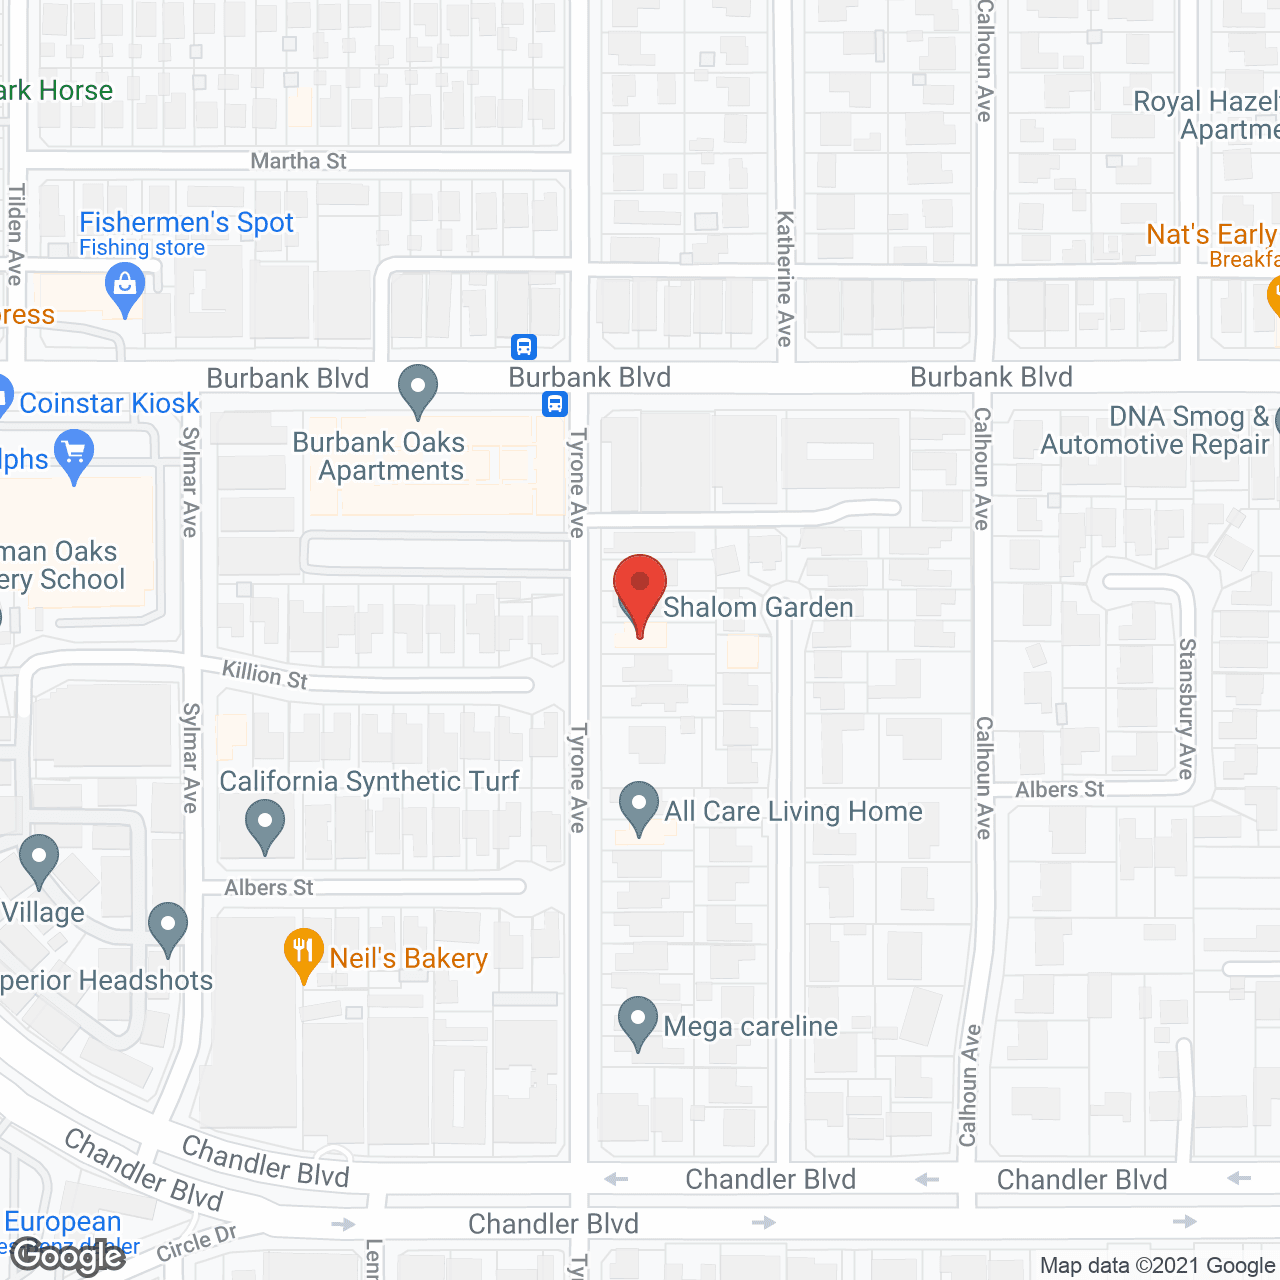 Shalom Garden in google map